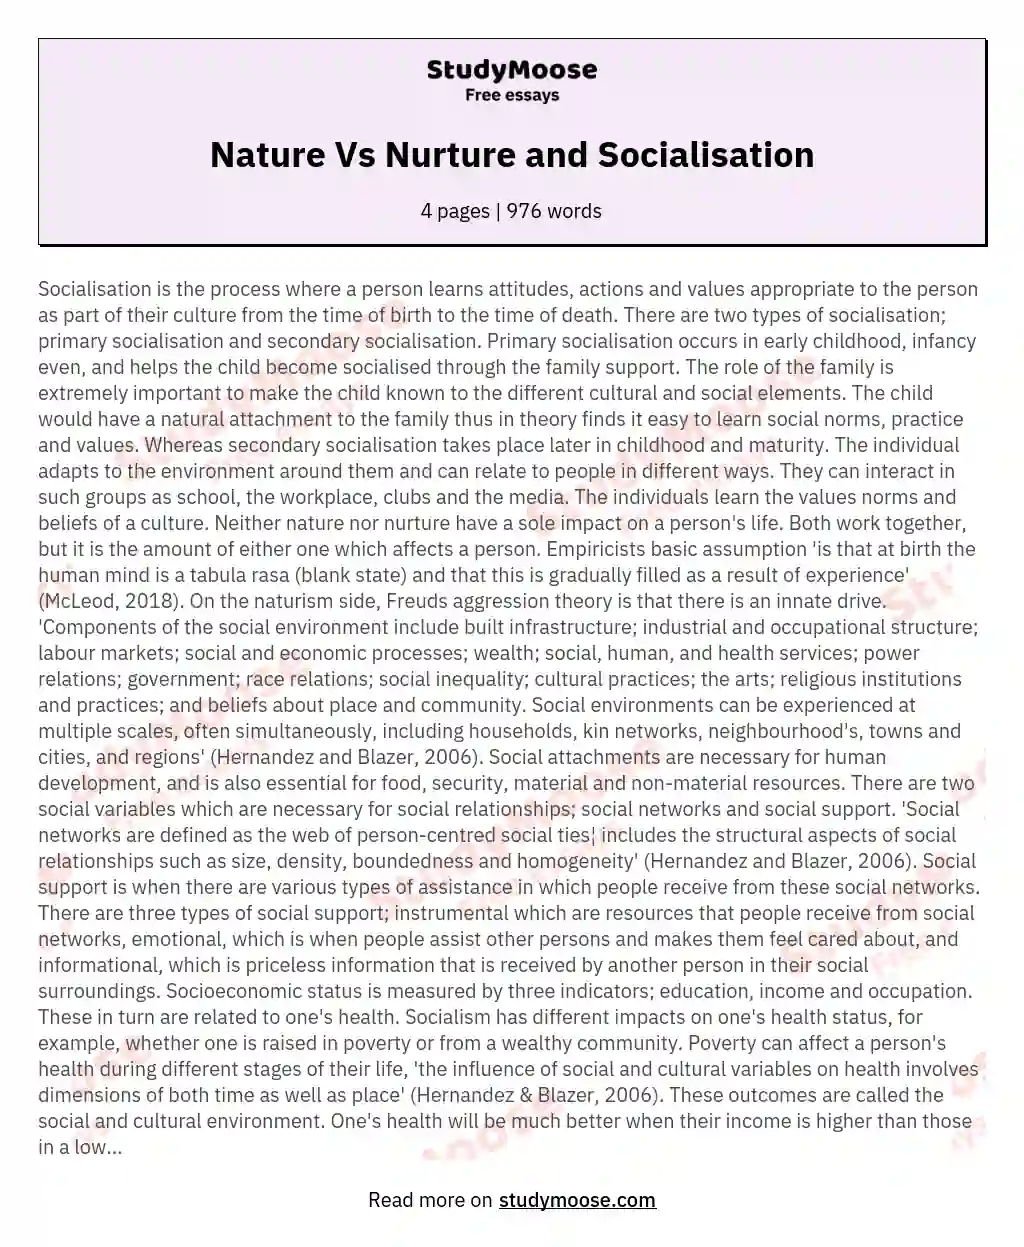 Nature Vs Nurture and Socialisation essay